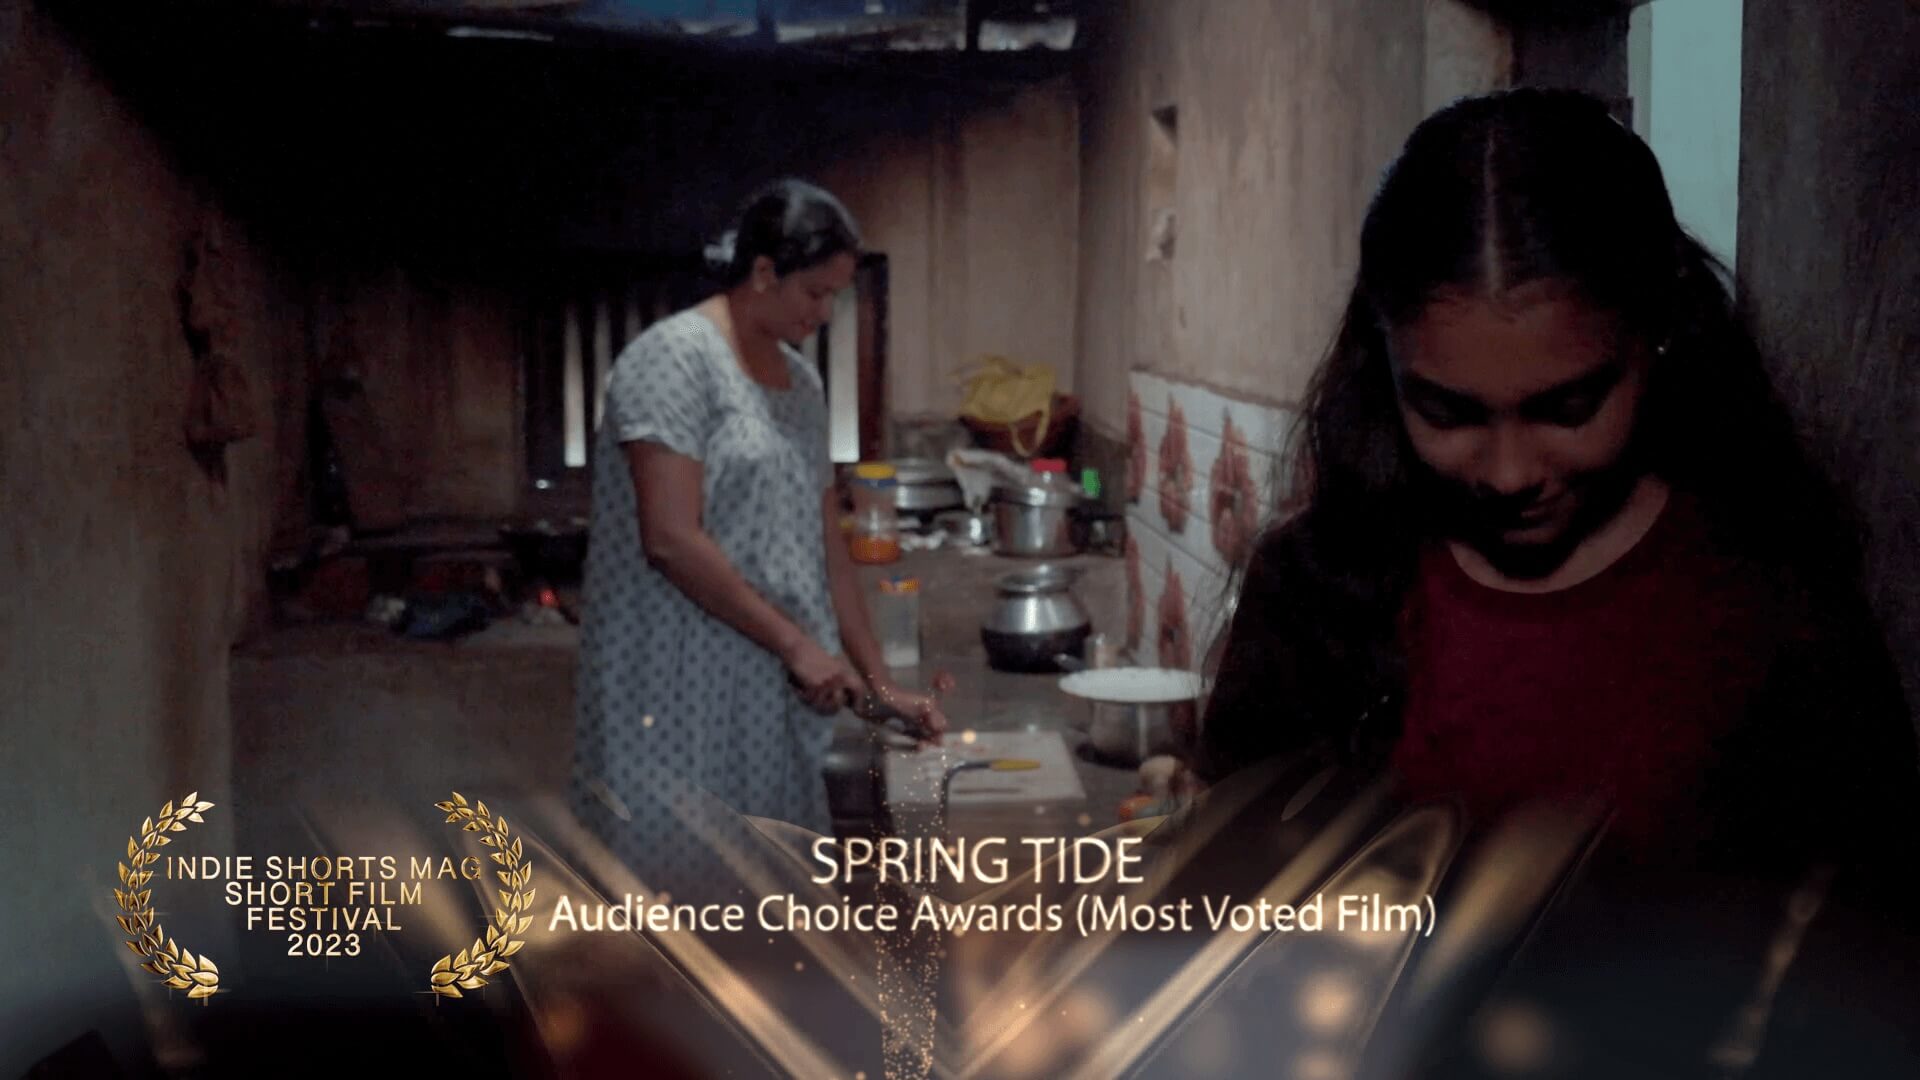 Indie Shorts Mag Short Film Festival - Most Voted Film - Spring Tide